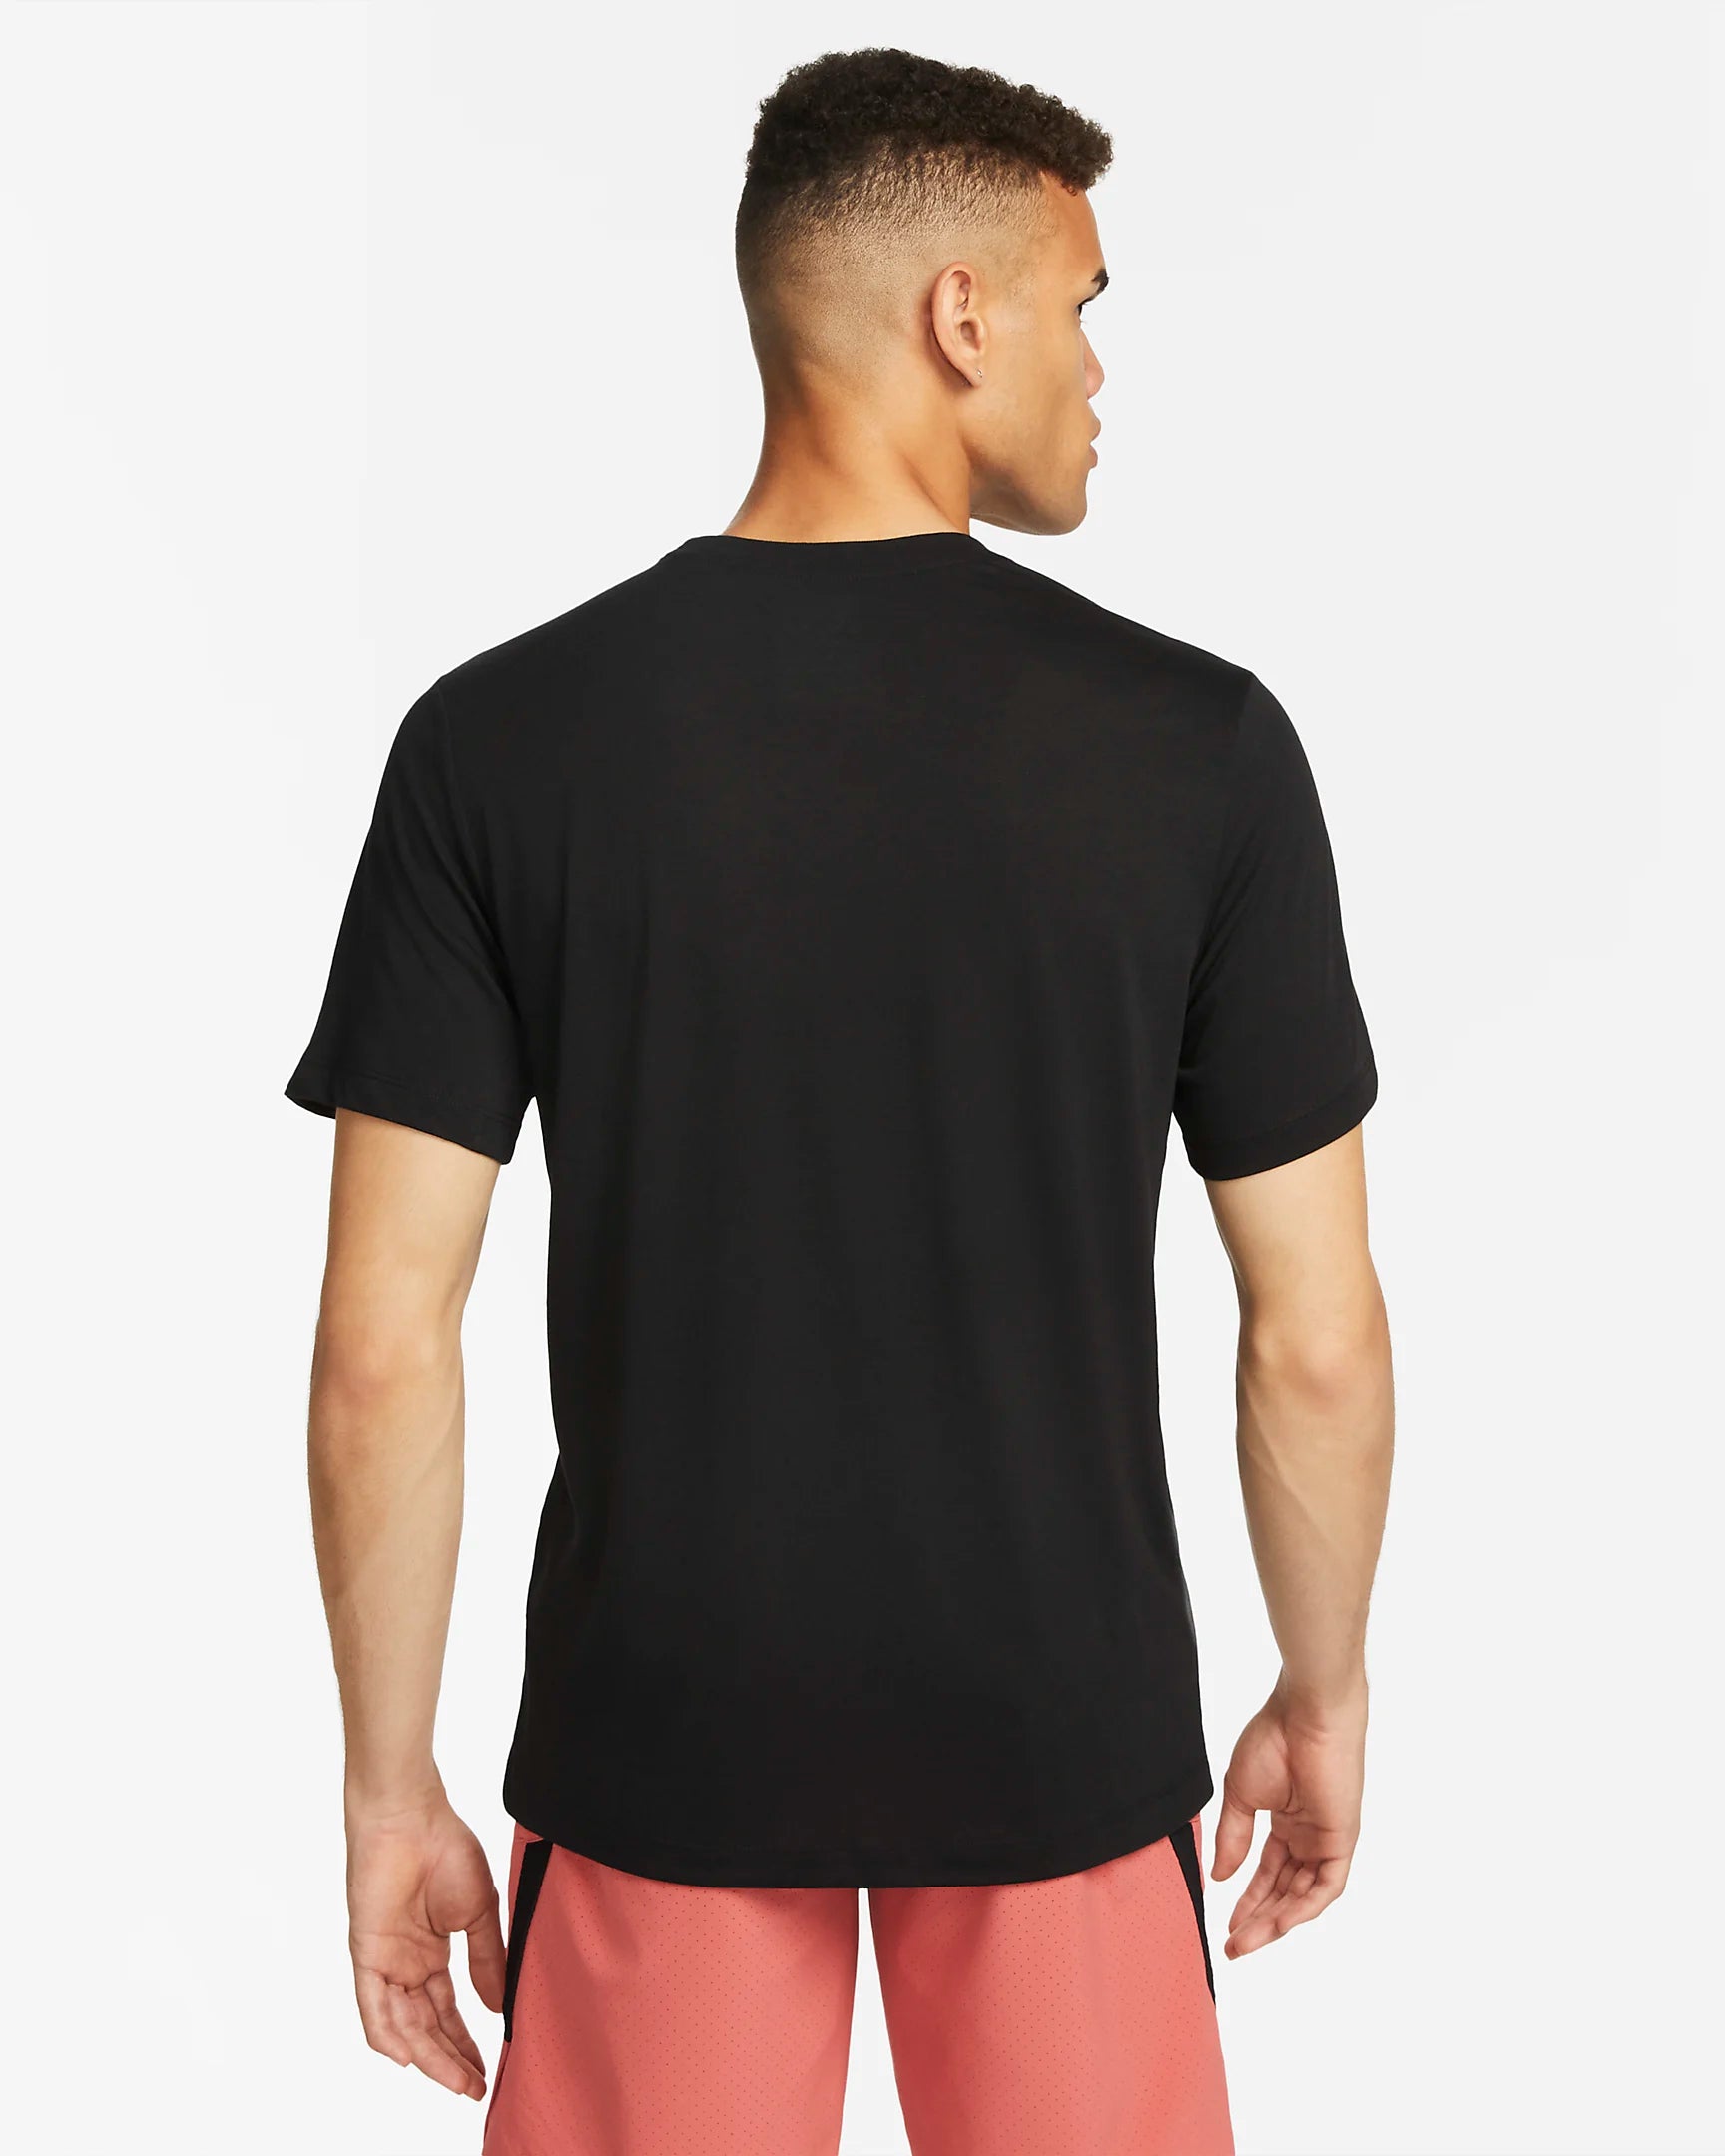 Nike Dri-Fit T-Shirt - Black